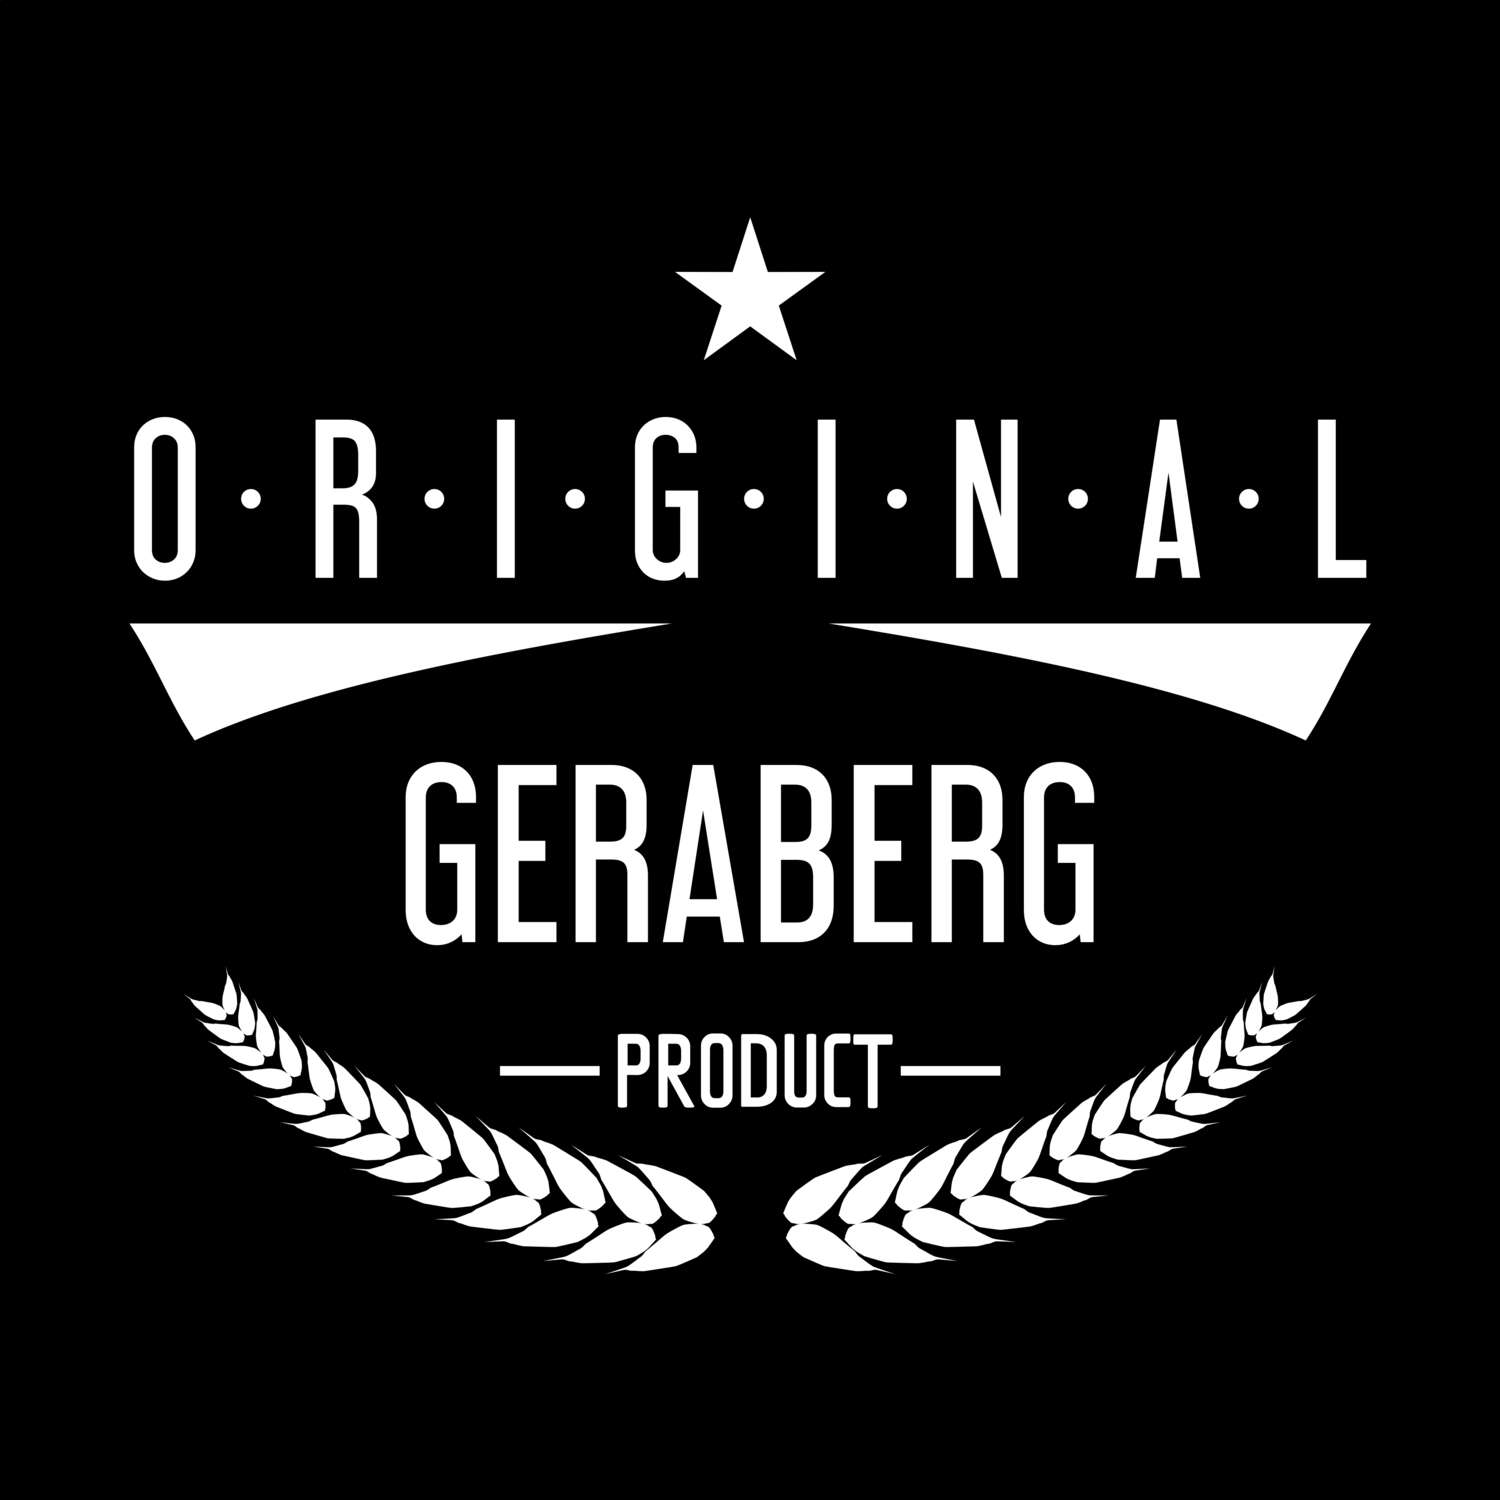 Geraberg T-Shirt »Original Product«